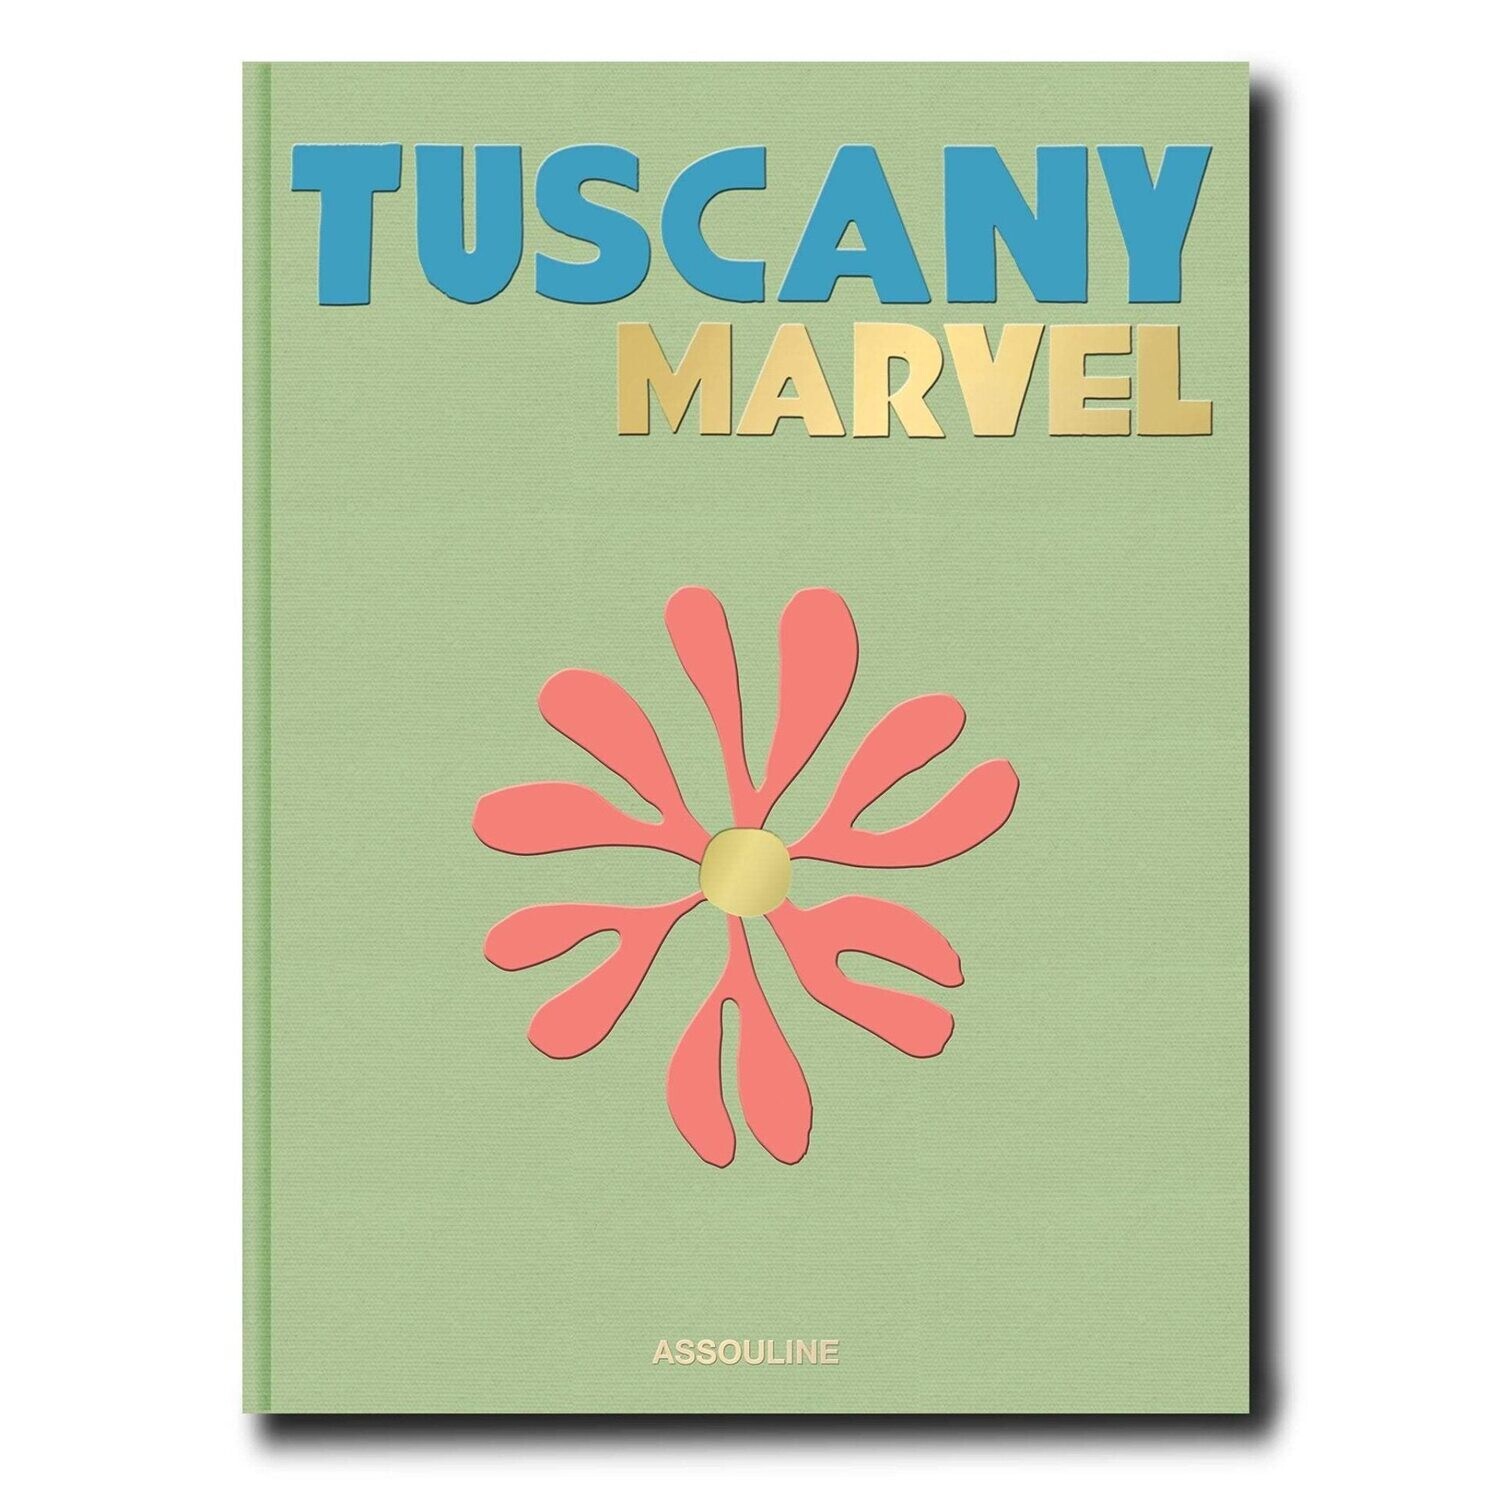 Tuscany Marvel Assouline Book